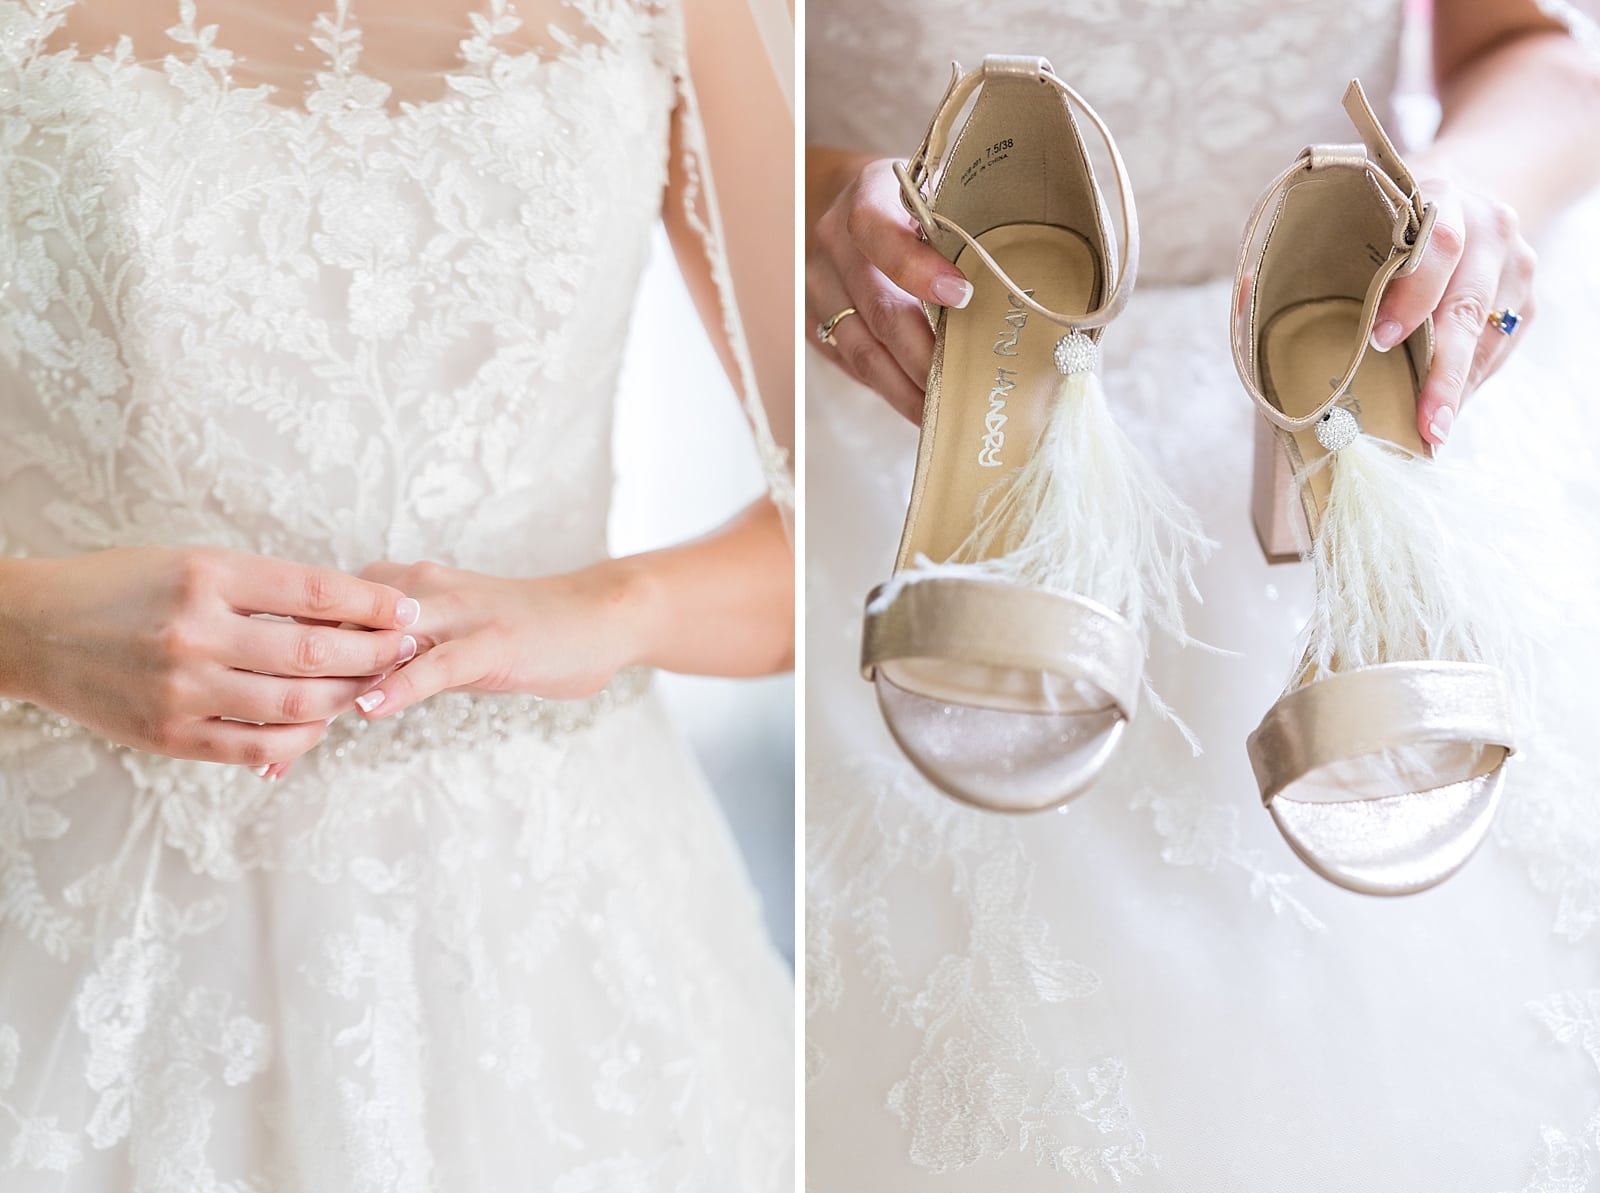 Bridal prep, bridal shoes, engagement ring,